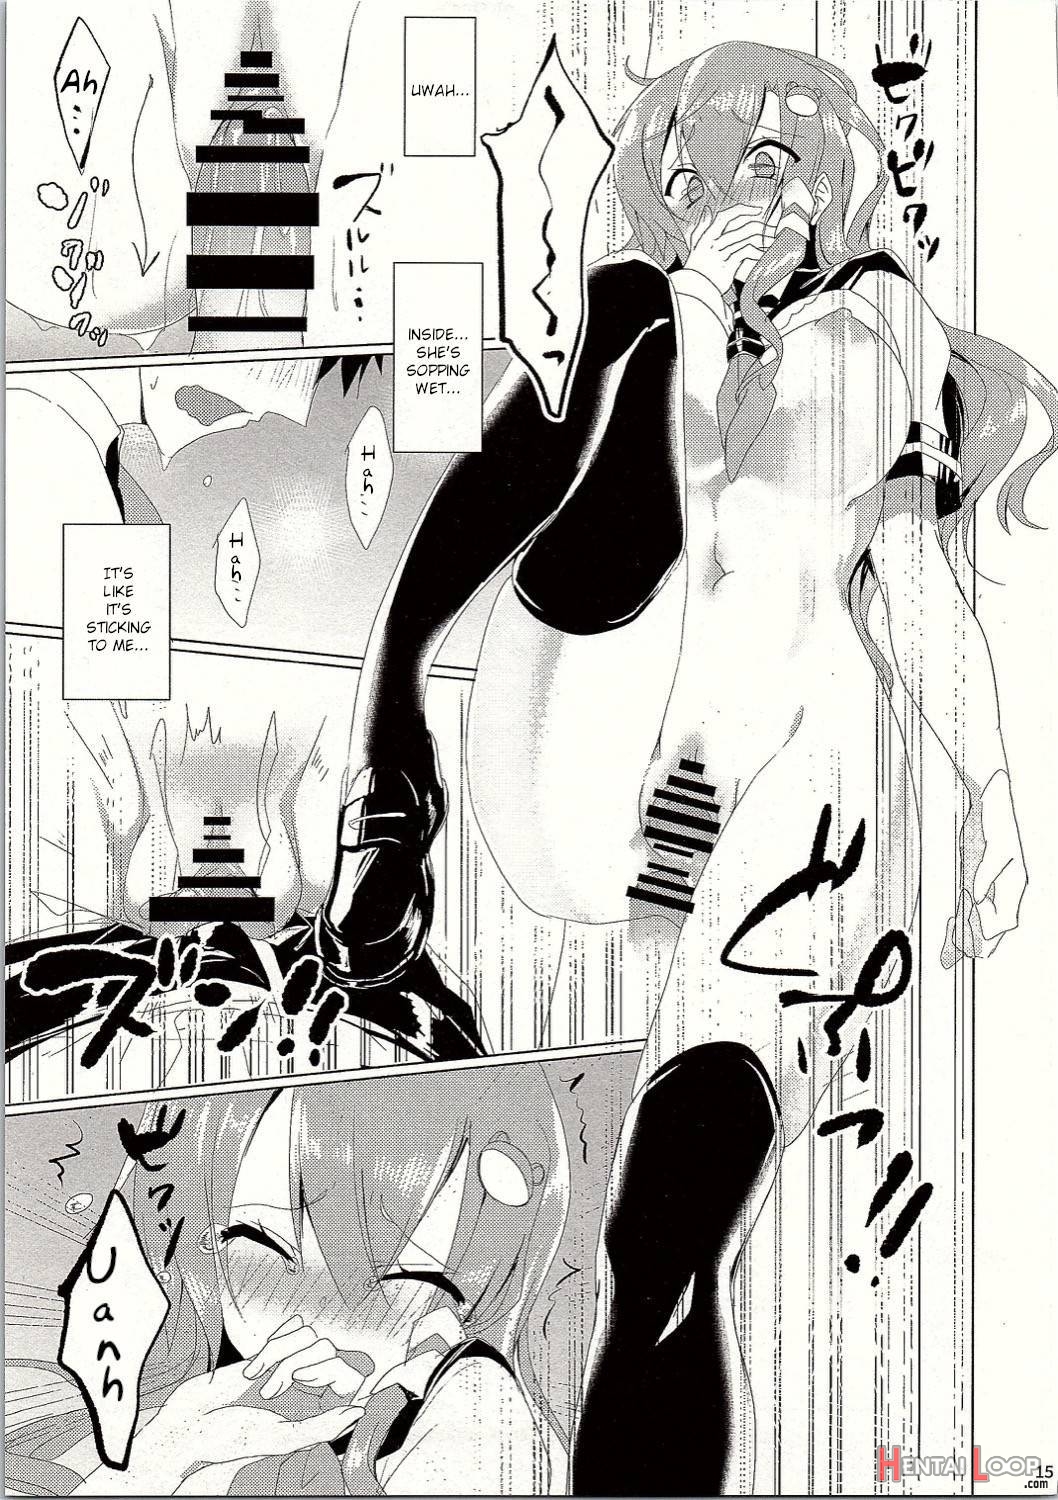 Sanae-san In Chikan Densha page 14